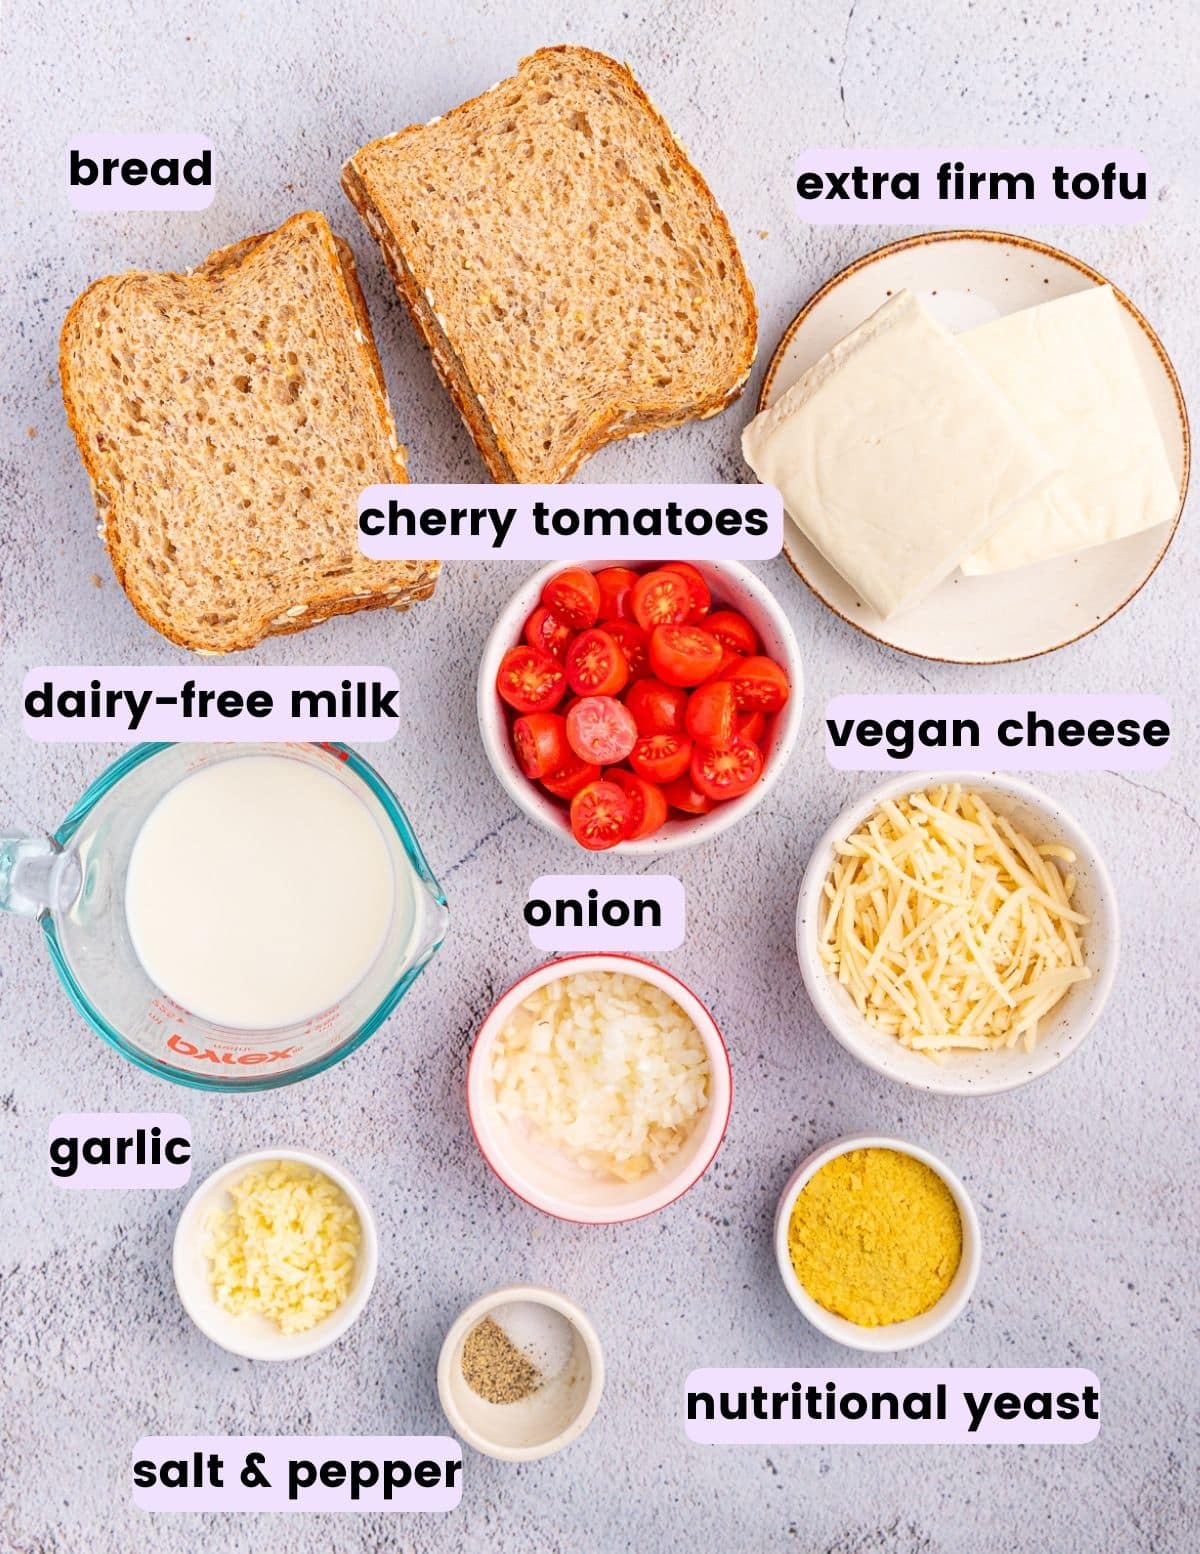 bread, extra firm tofu, cherry tomatoes, dairy-free milk, vegan cheese, onion, garlic, salt, pepper, and nutritional yeast